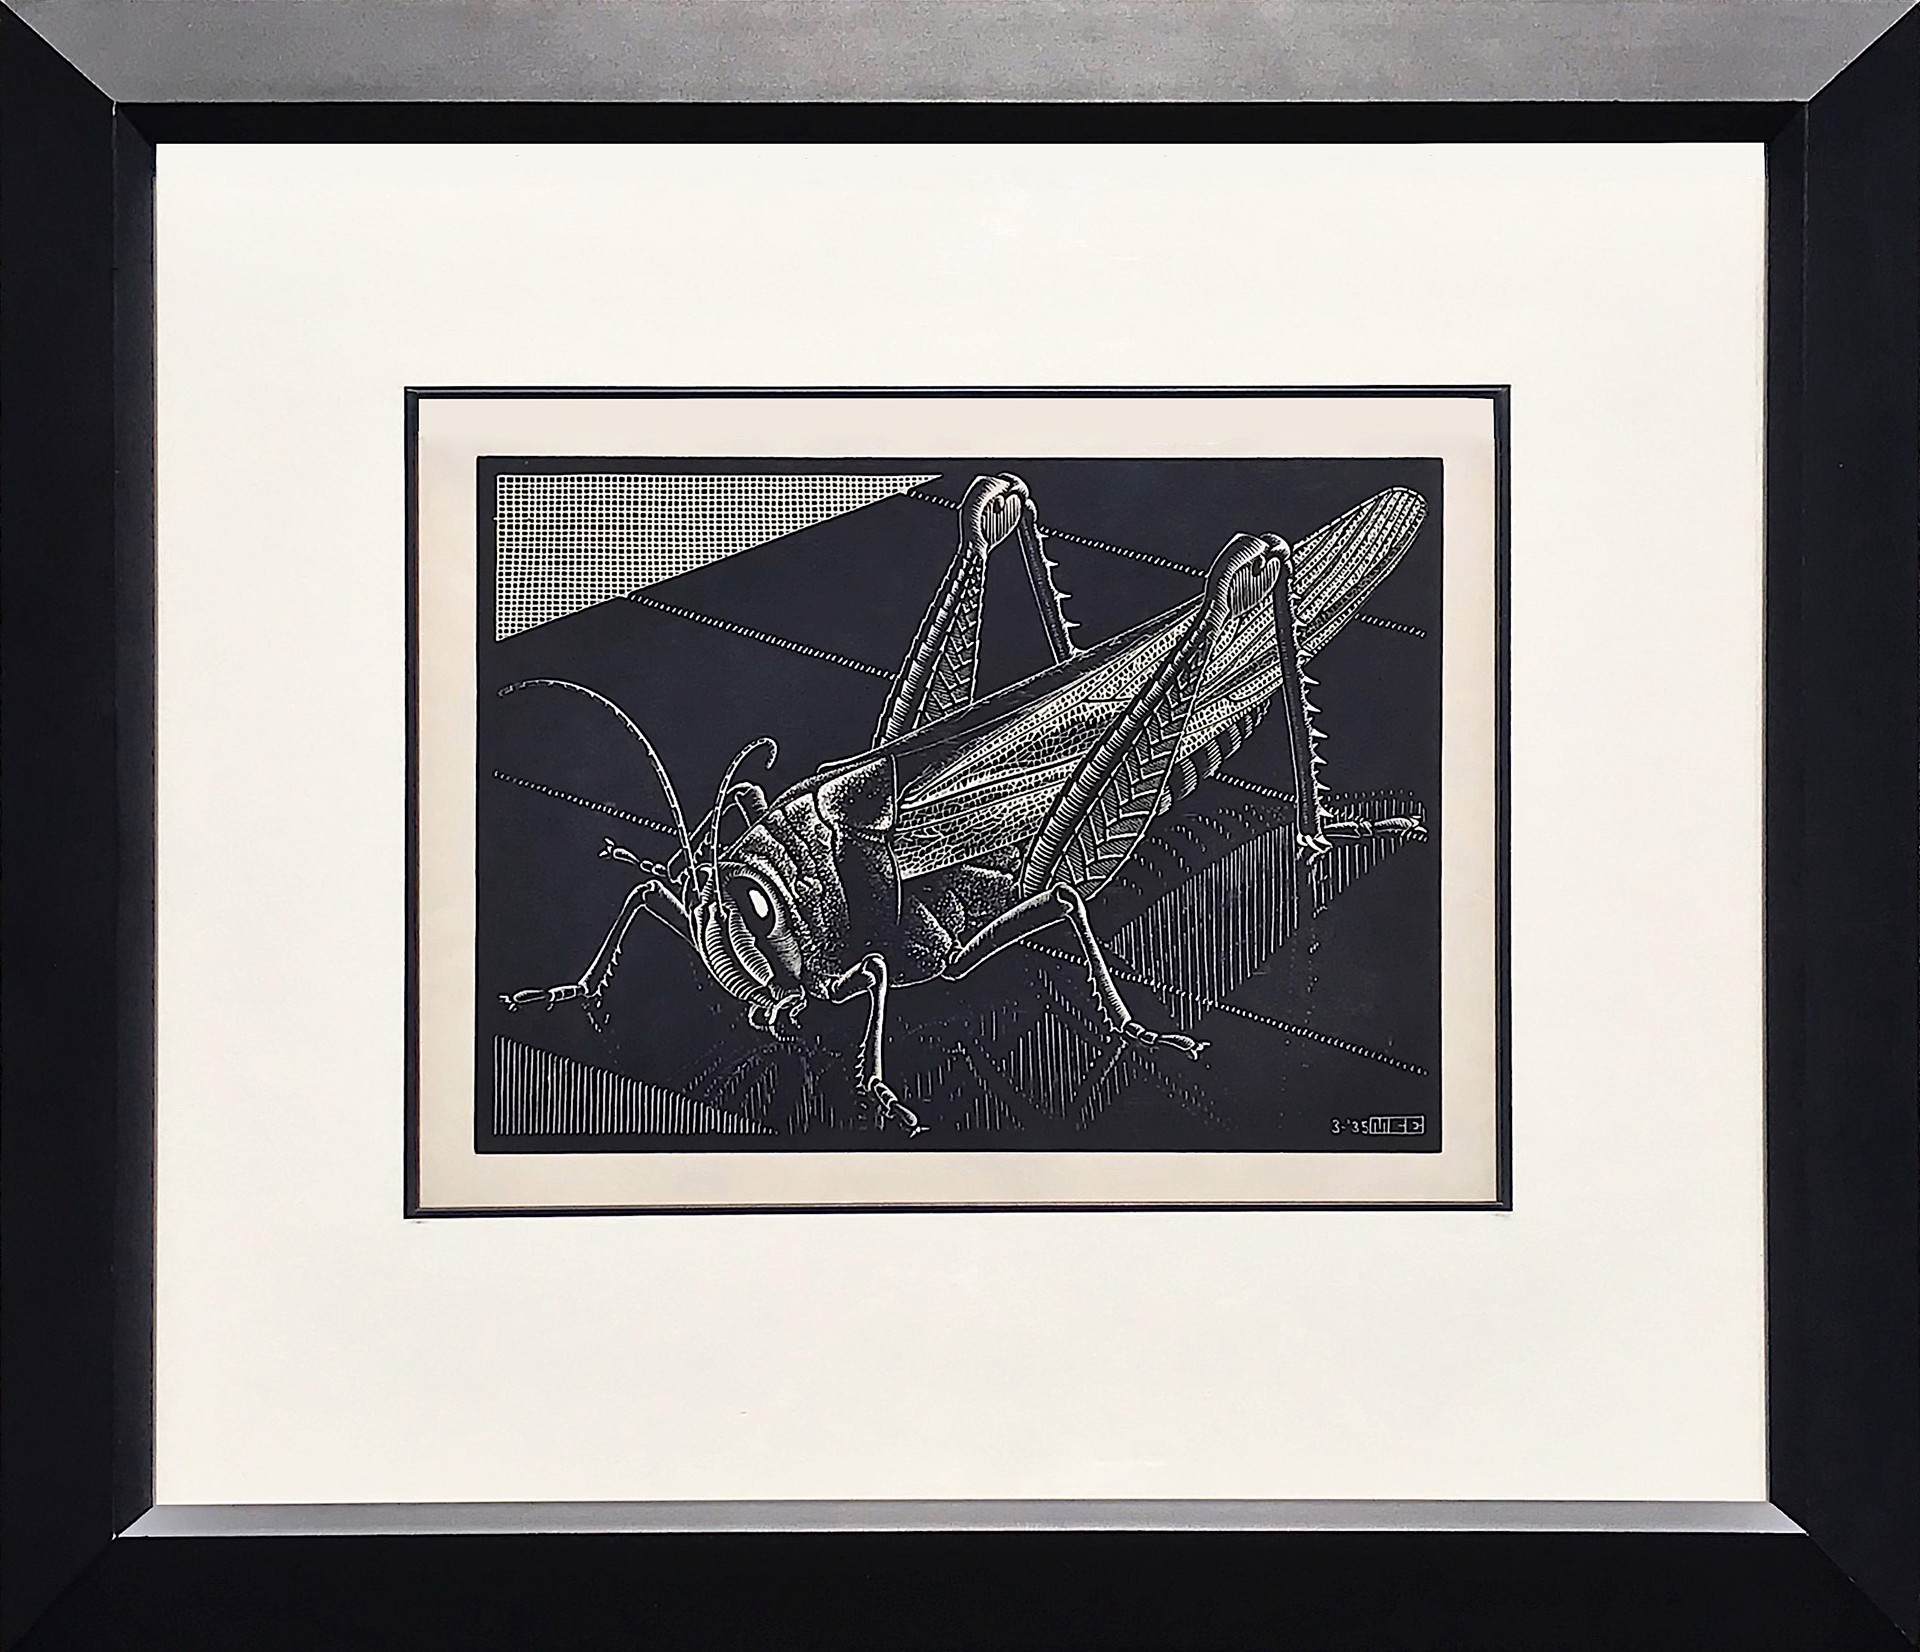 Grasshopper by M.C. Escher